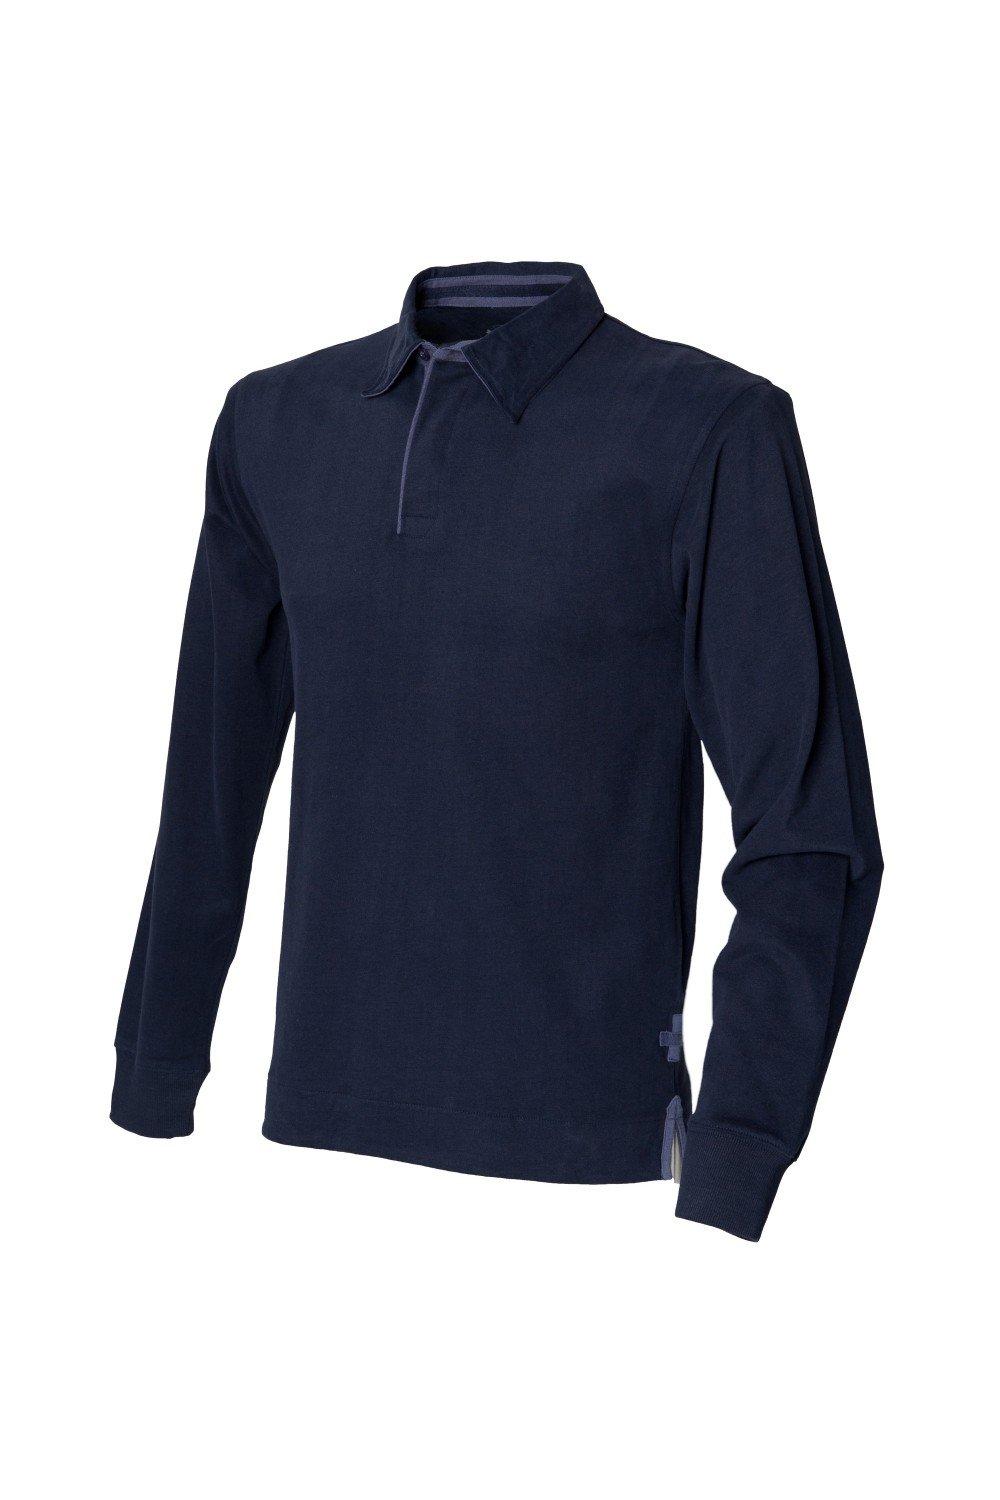 цена Супермягкая рубашка-поло для регби с длинными рукавами Front Row, темно-синий